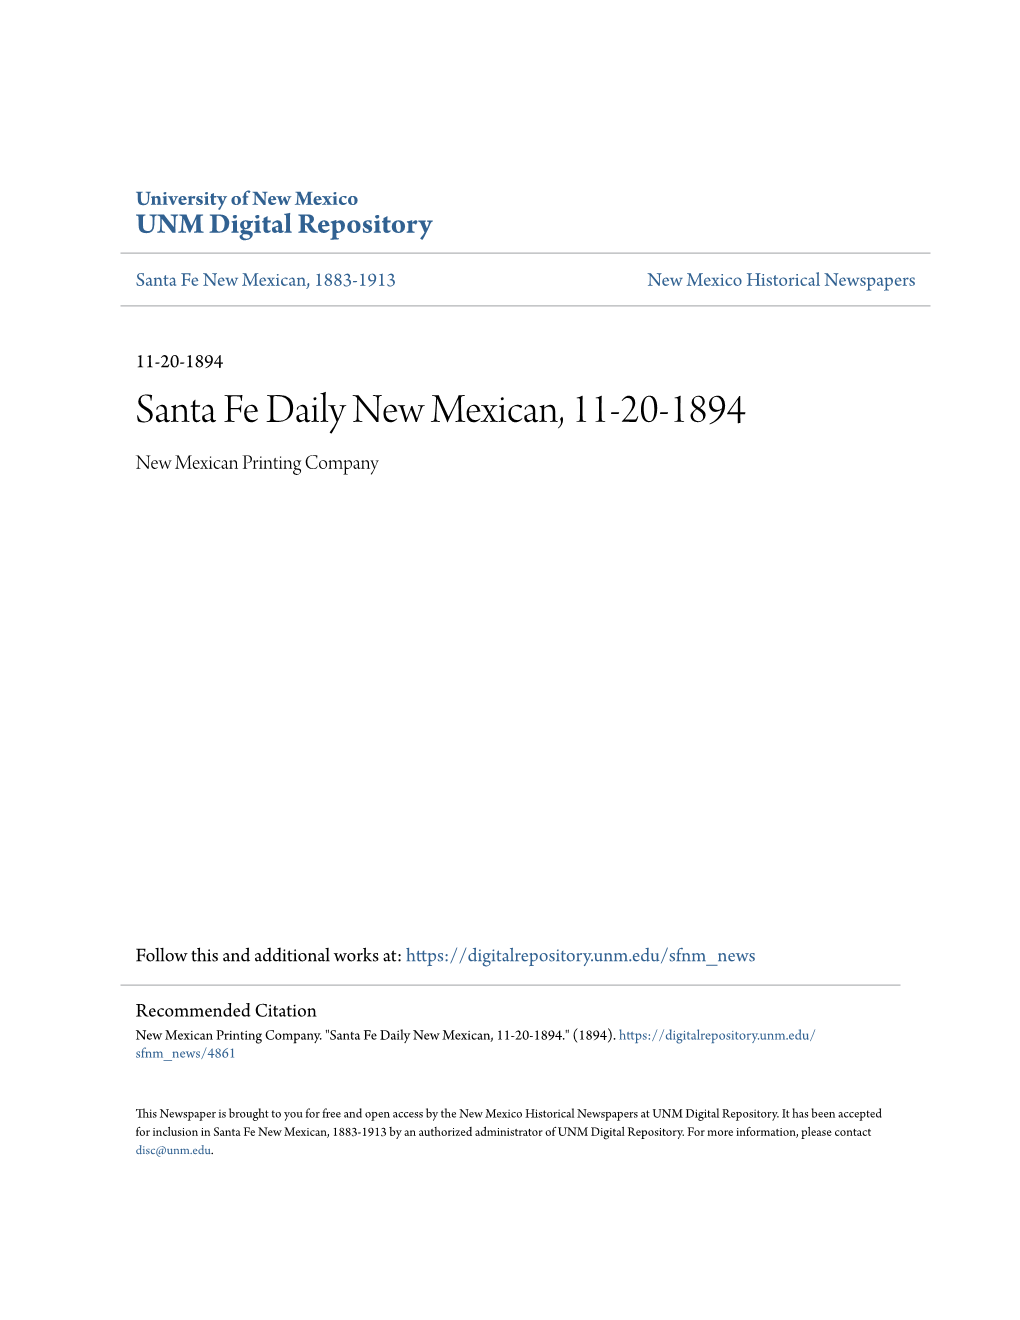 Santa Fe Daily New Mexican, 11-20-1894 New Mexican Printing Company